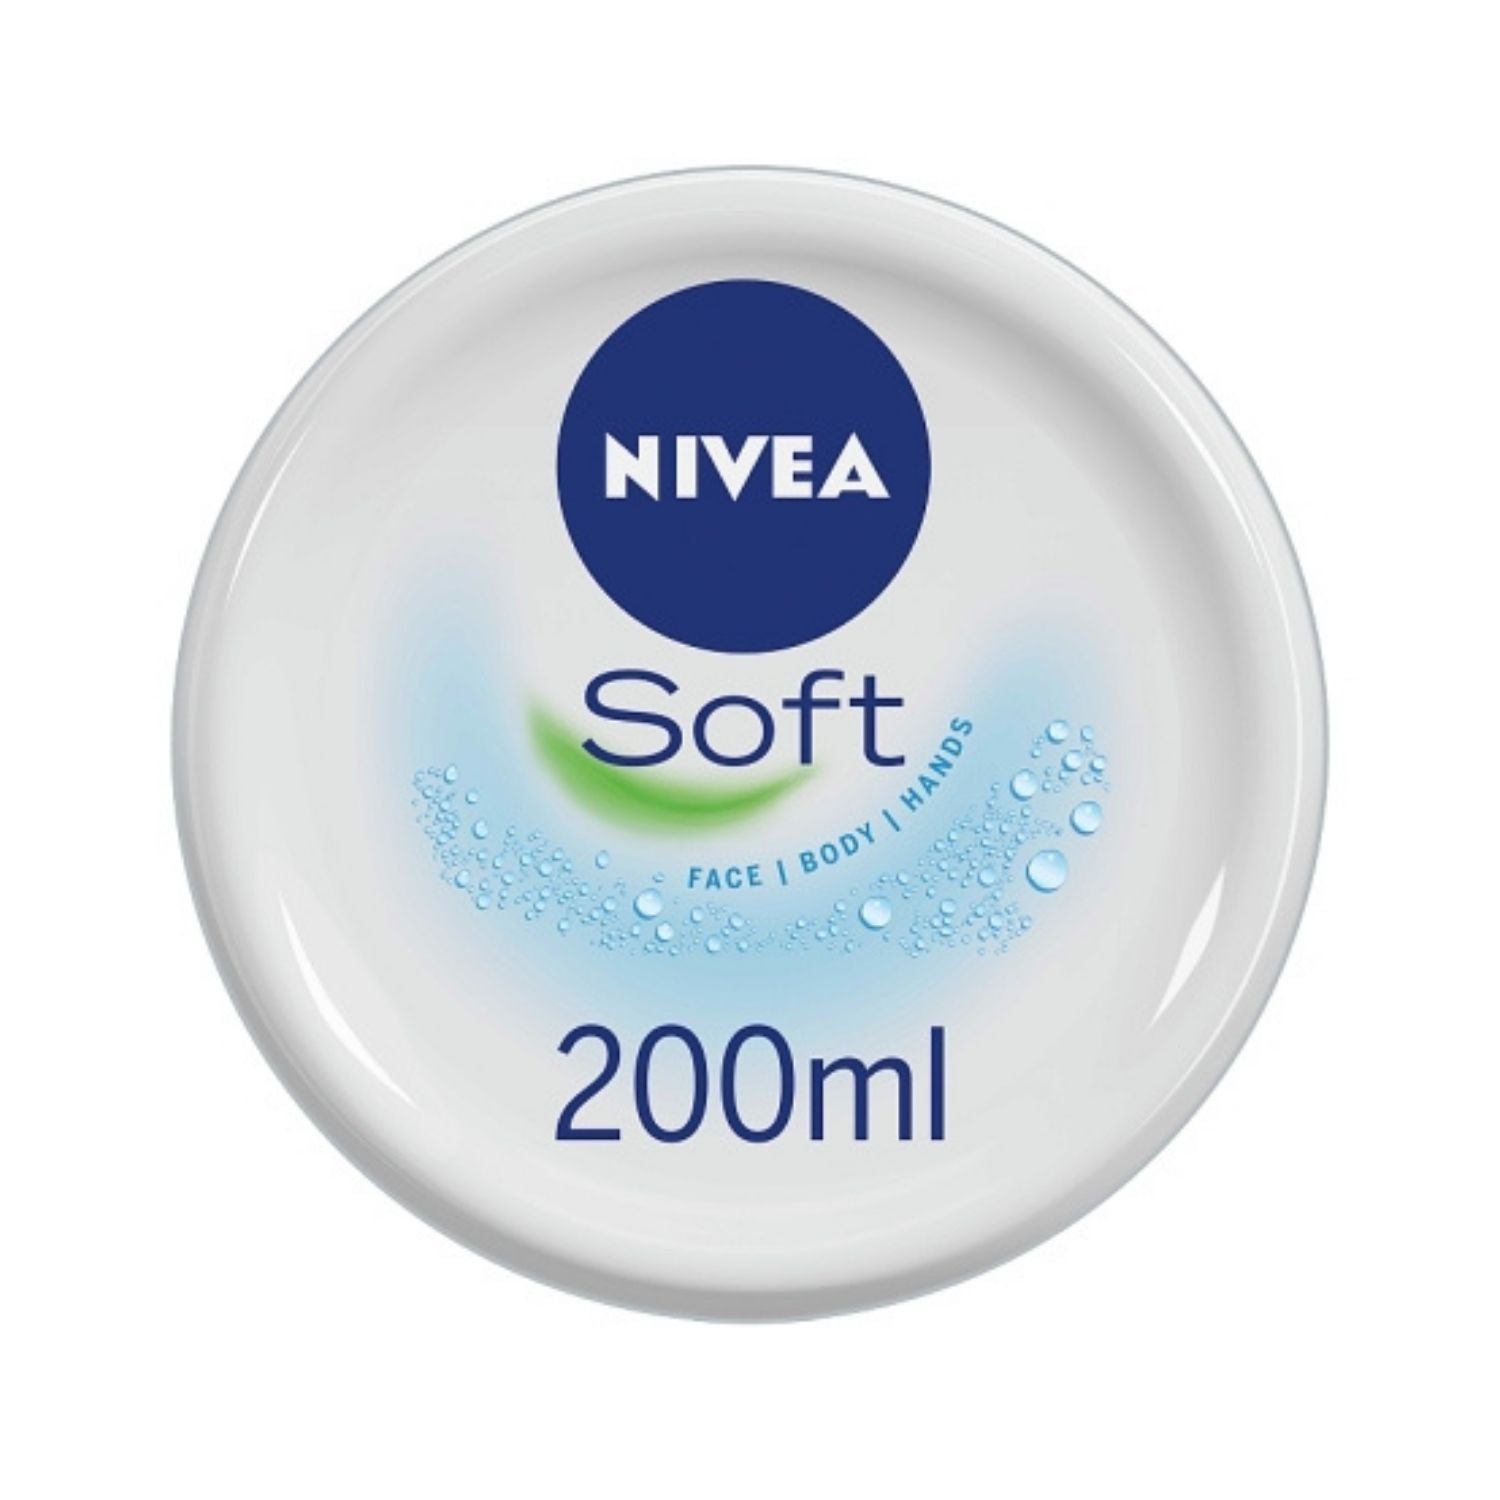 Nivea Soft Intensive Moisturising Cream Pot - 200ml 1 Shaws Department Stores